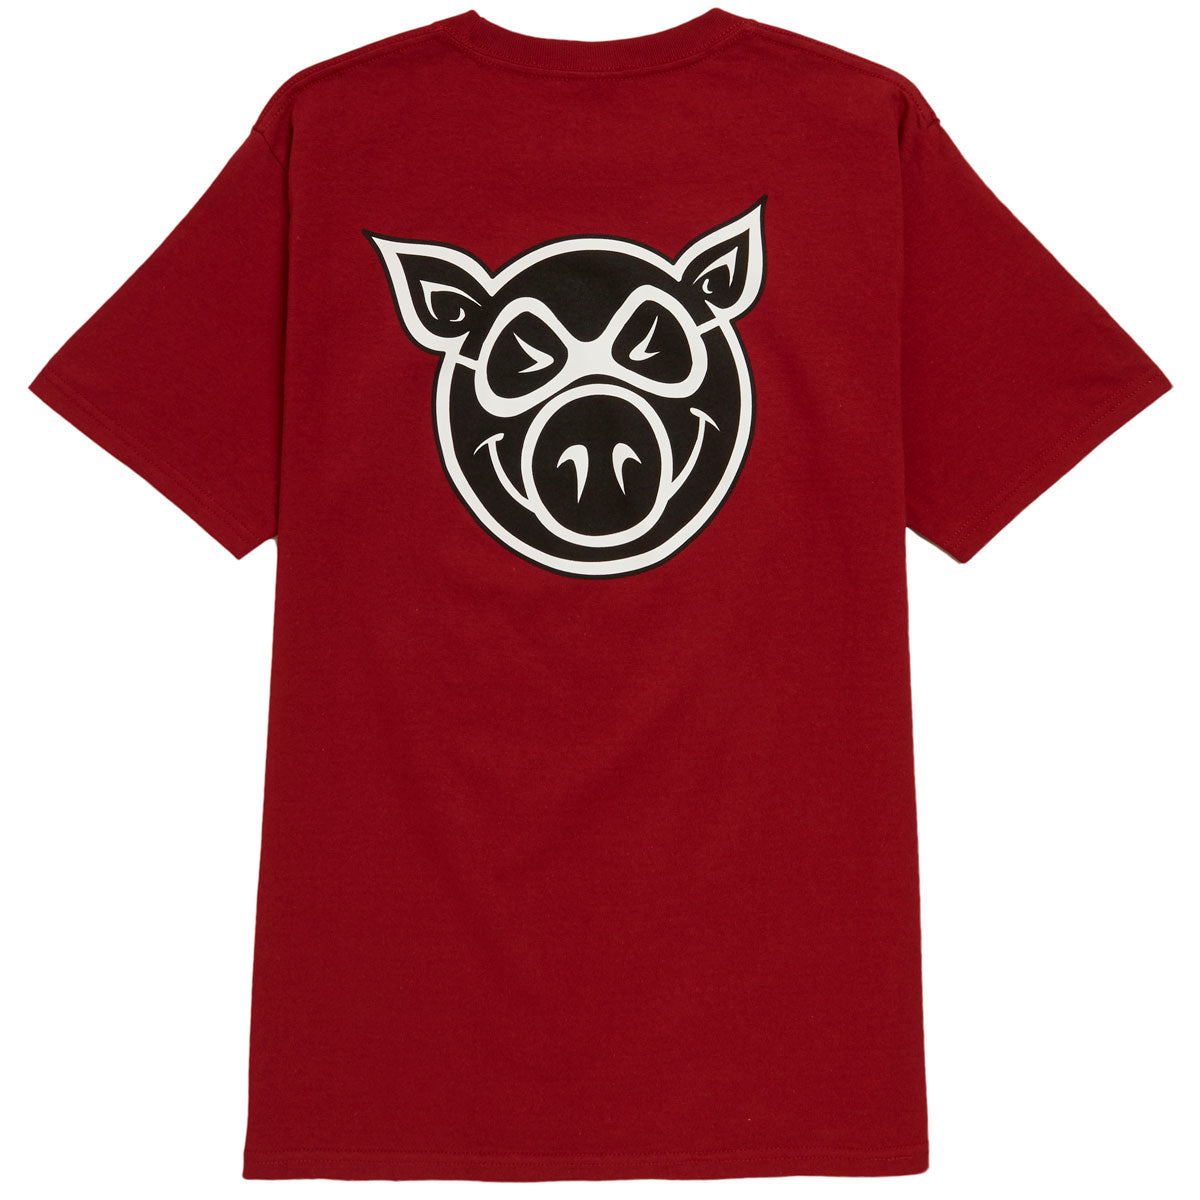 Pig F and B Head T-Shirt - Cardinal image 2